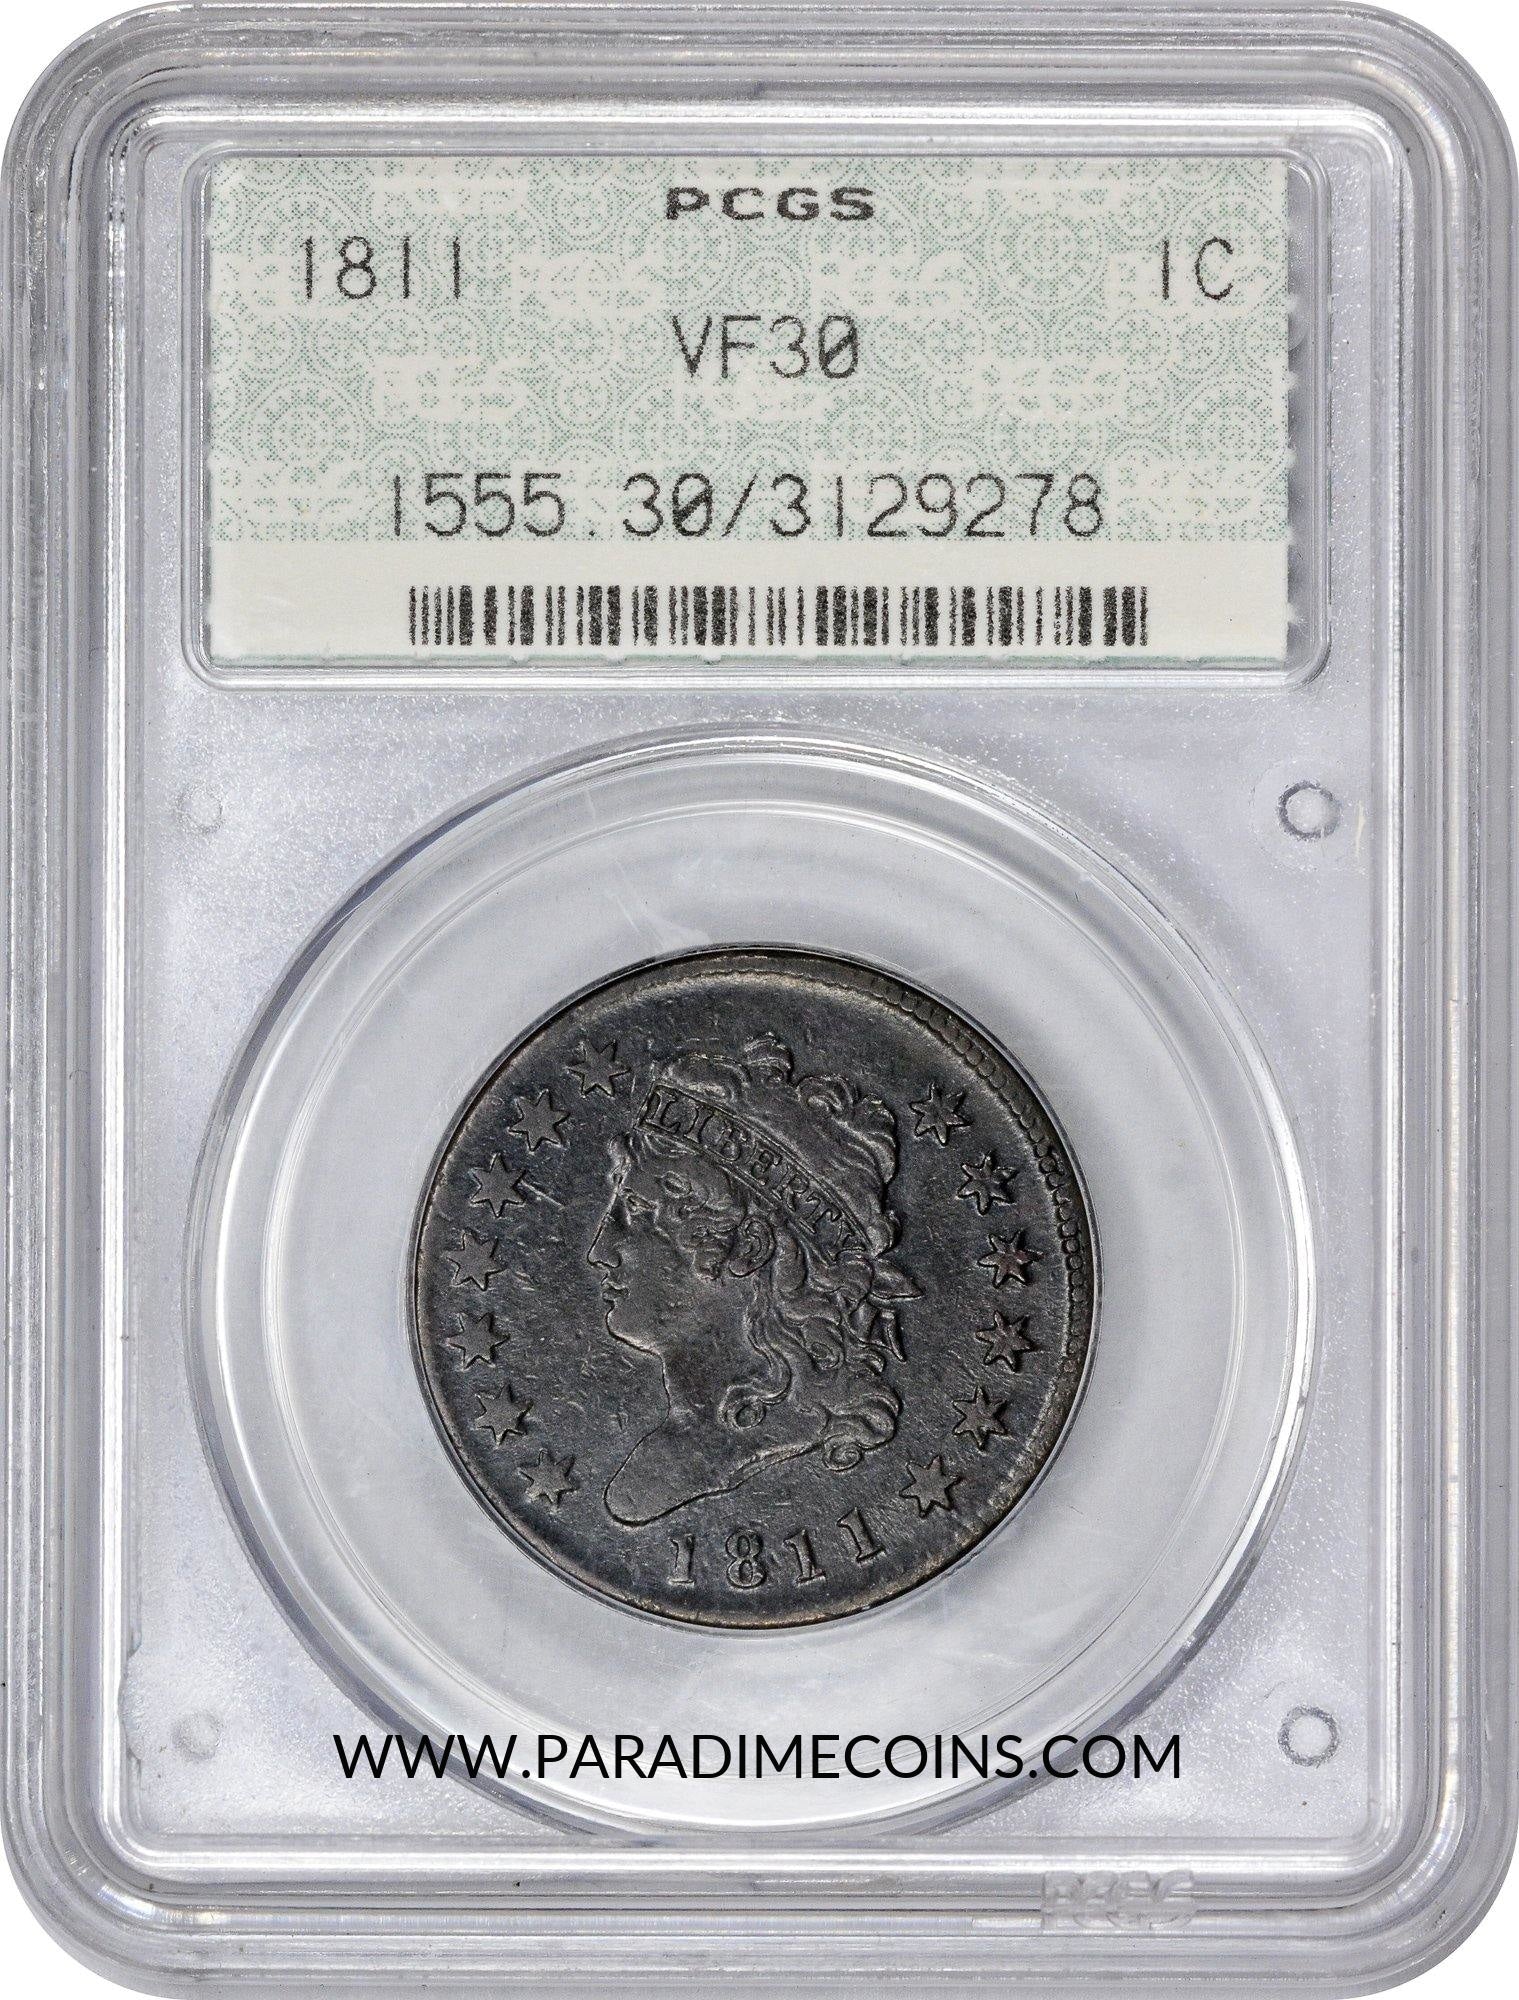 1811 1C VF30 PCGS DOILY - Paradime Coins | PCGS NGC CACG CAC Rare US Numismatic Coins For Sale